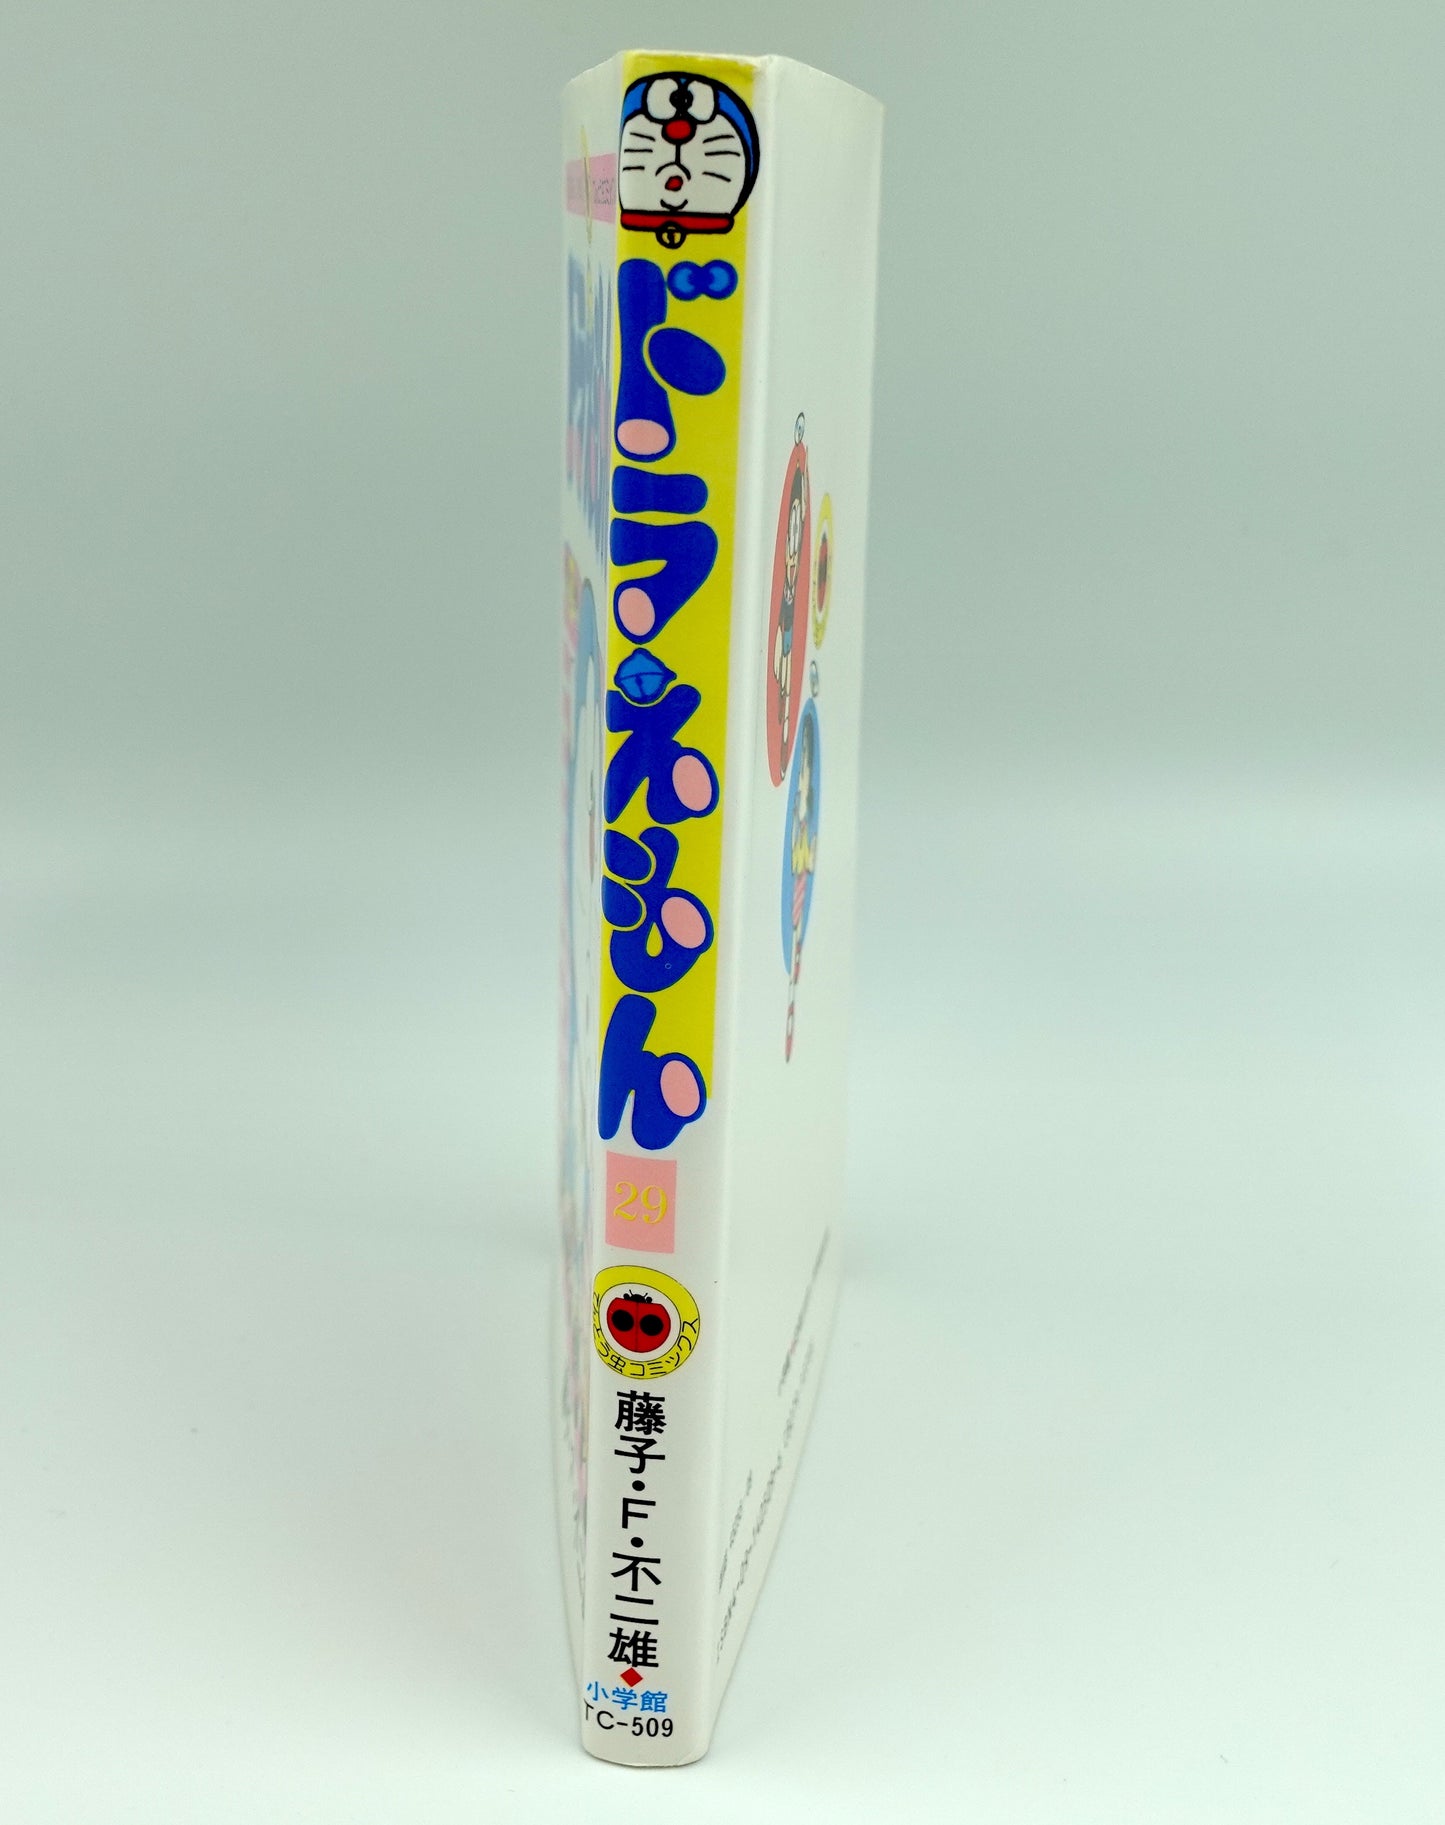 Doraemon Vol.29- Official Japanese Edition